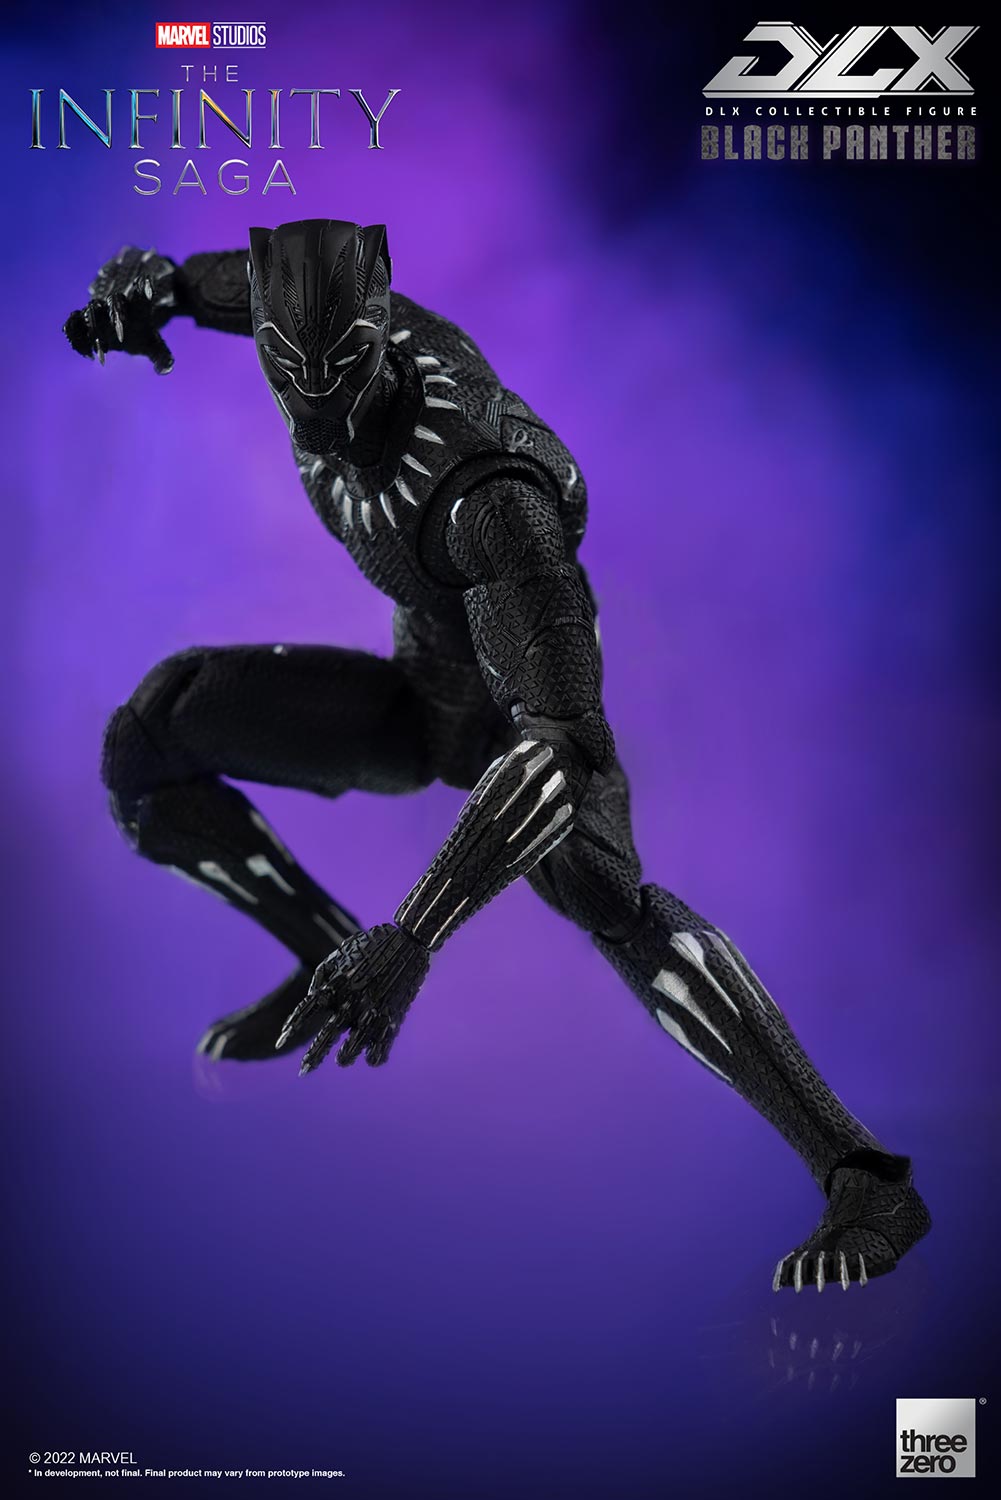 Marvel Studios: The Infinity Saga, DLX Black Panther